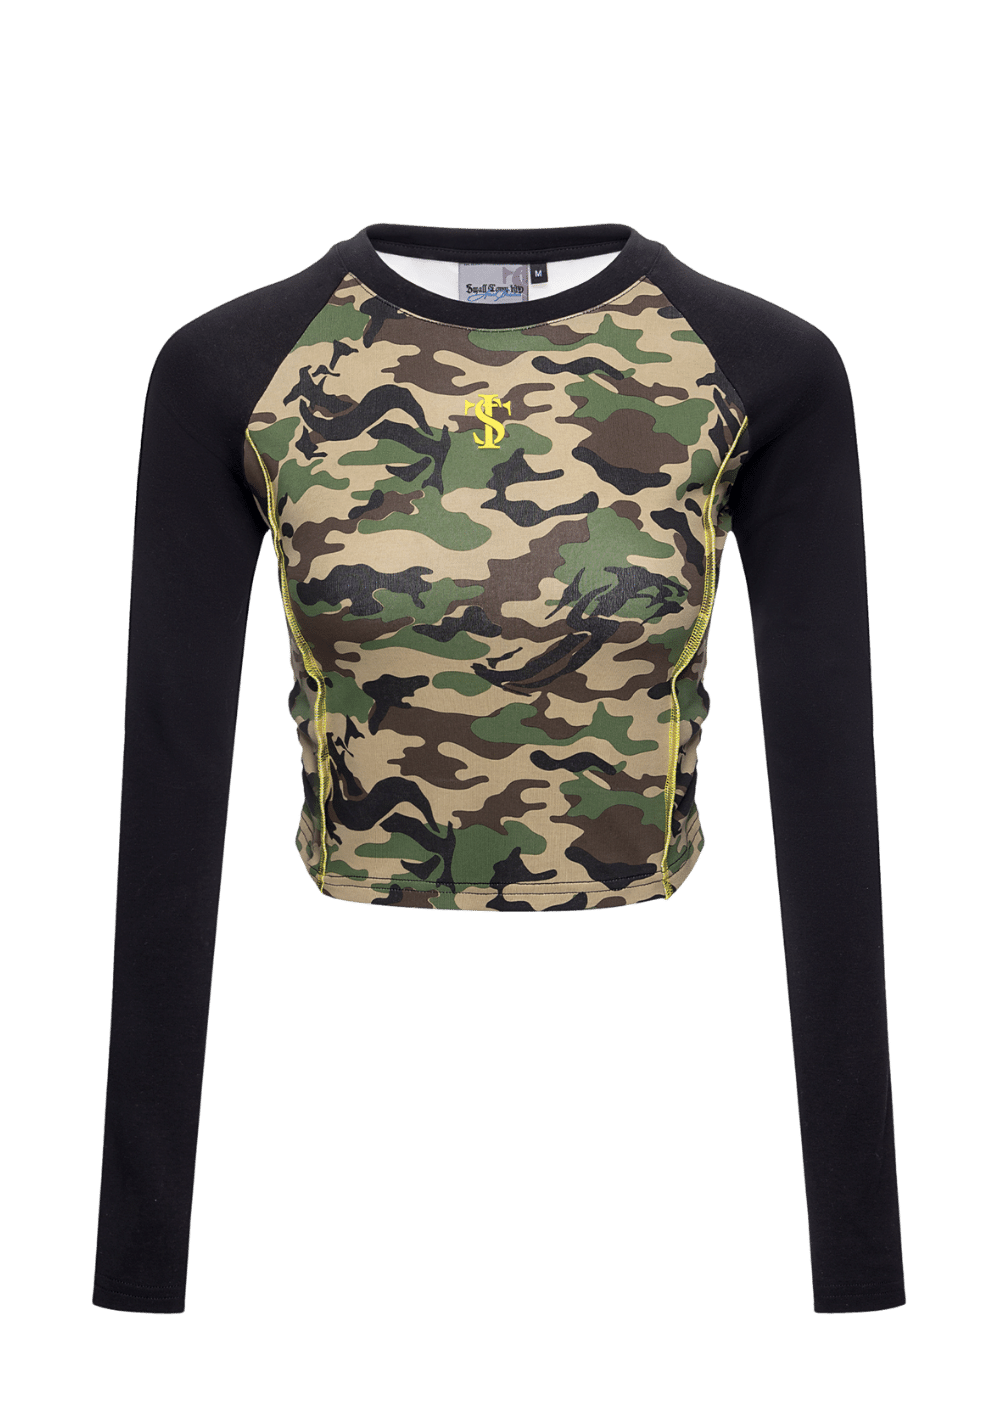 Camouflage Crop Top Long Sleeve Shirt - PSYLOS 1, Camouflage Crop Top Long Sleeve Shirt, T-Shirt, Small Town Kid, PSYLOS 1